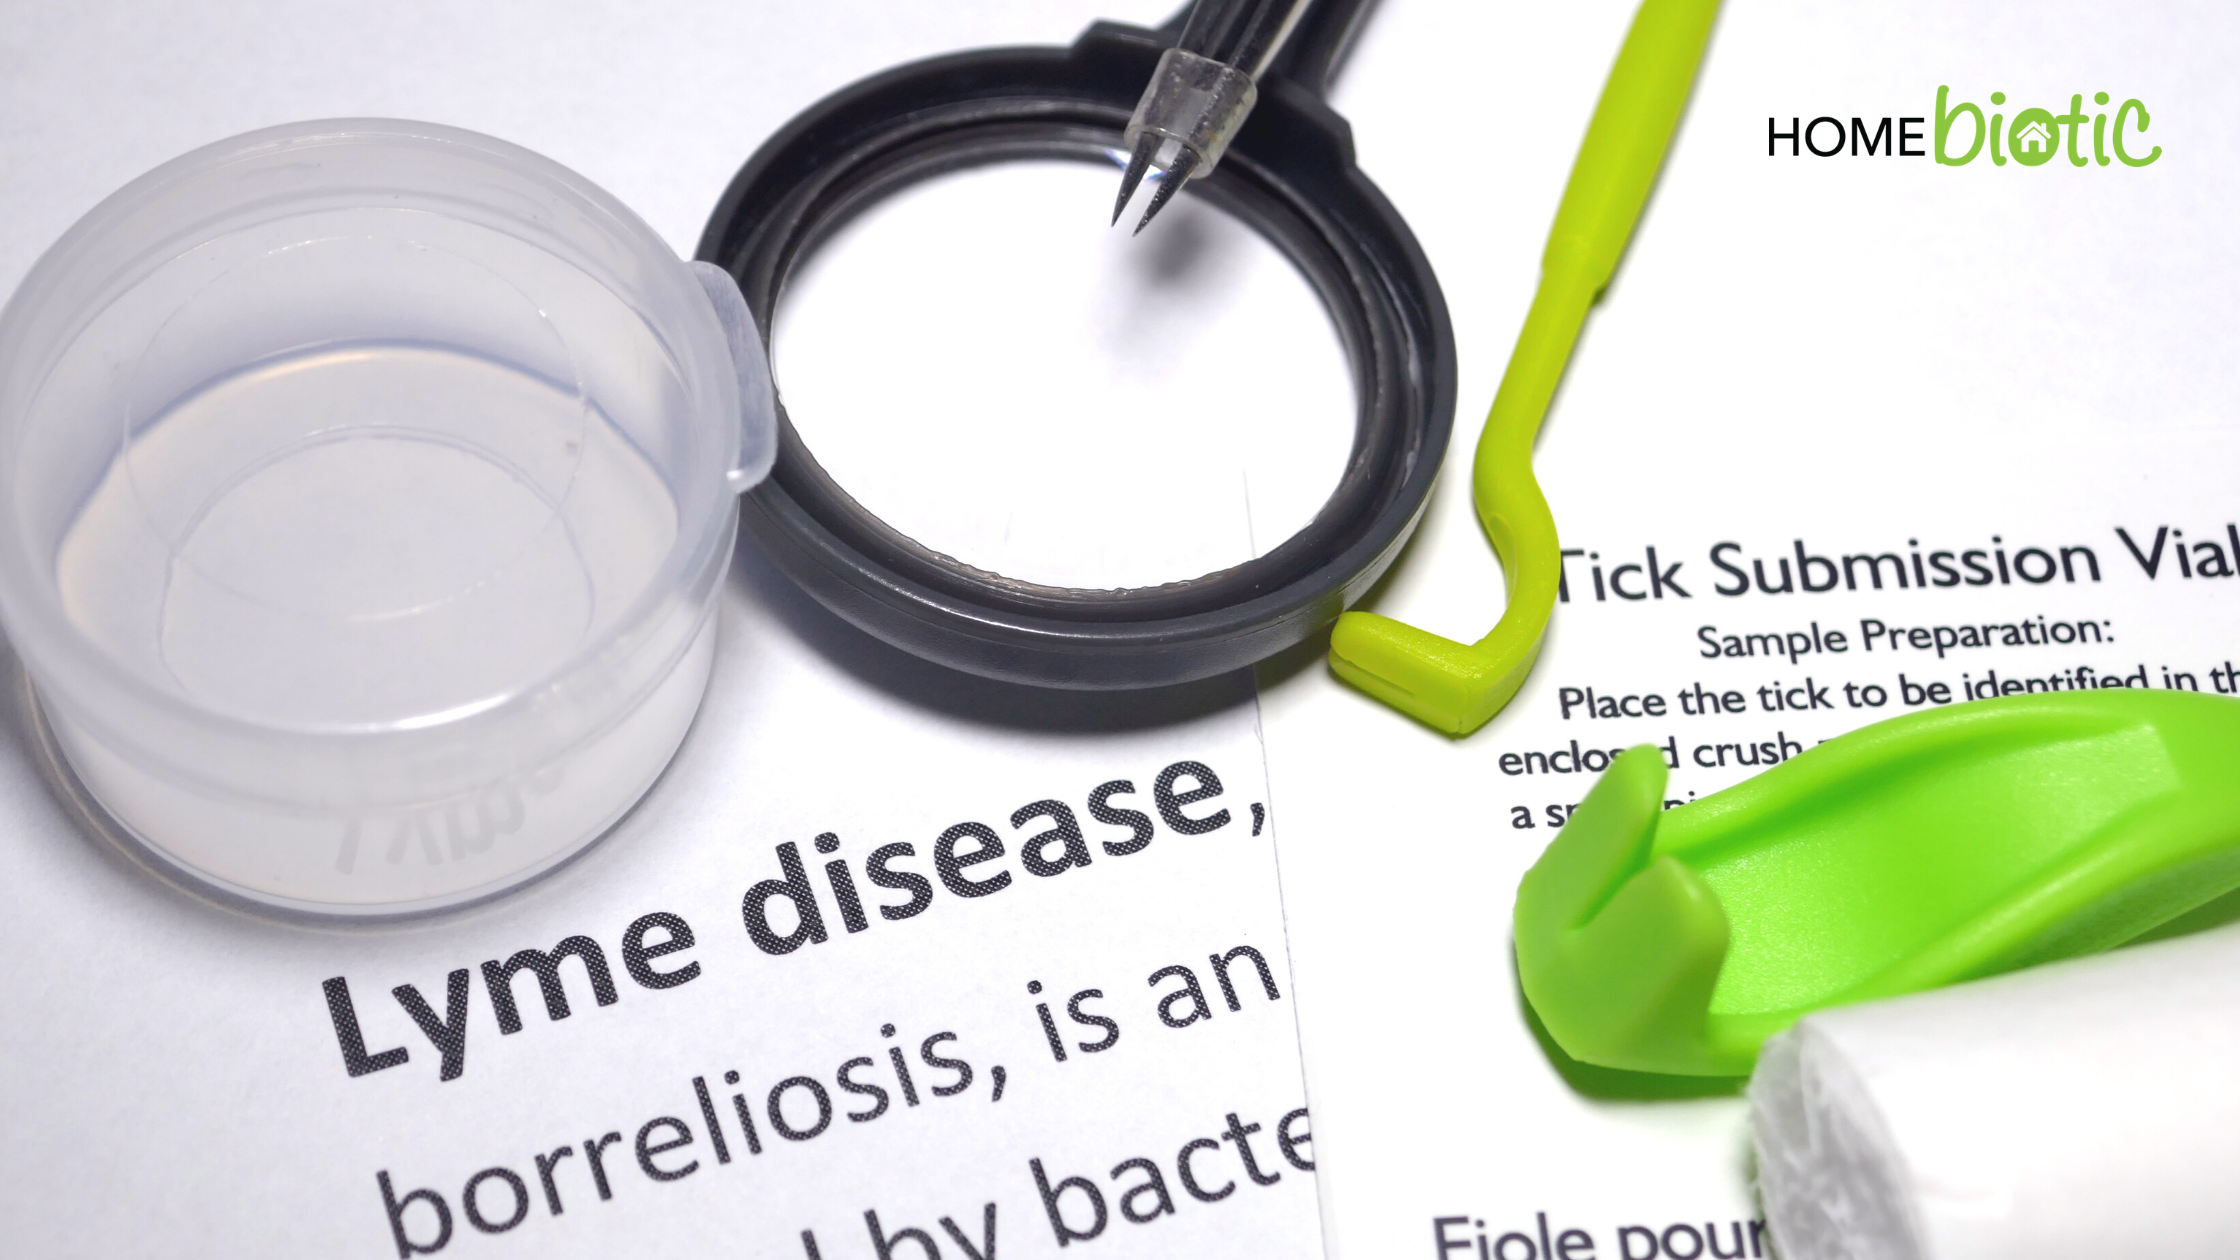 5 Must-Have Lyme Disease & Mold Resources | Lyme Disease Testing Supplies